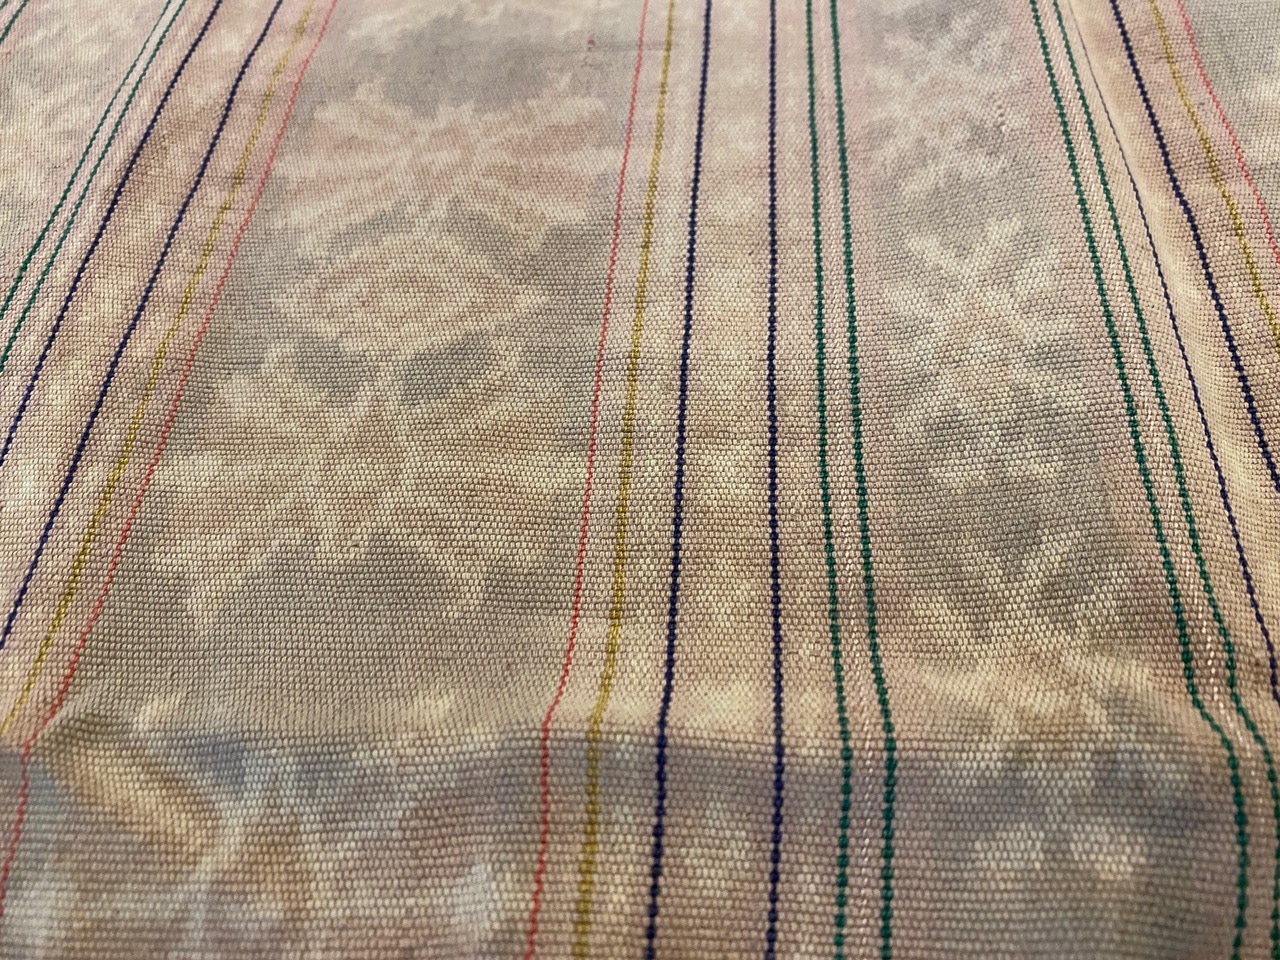 antique sarong from Sumatra